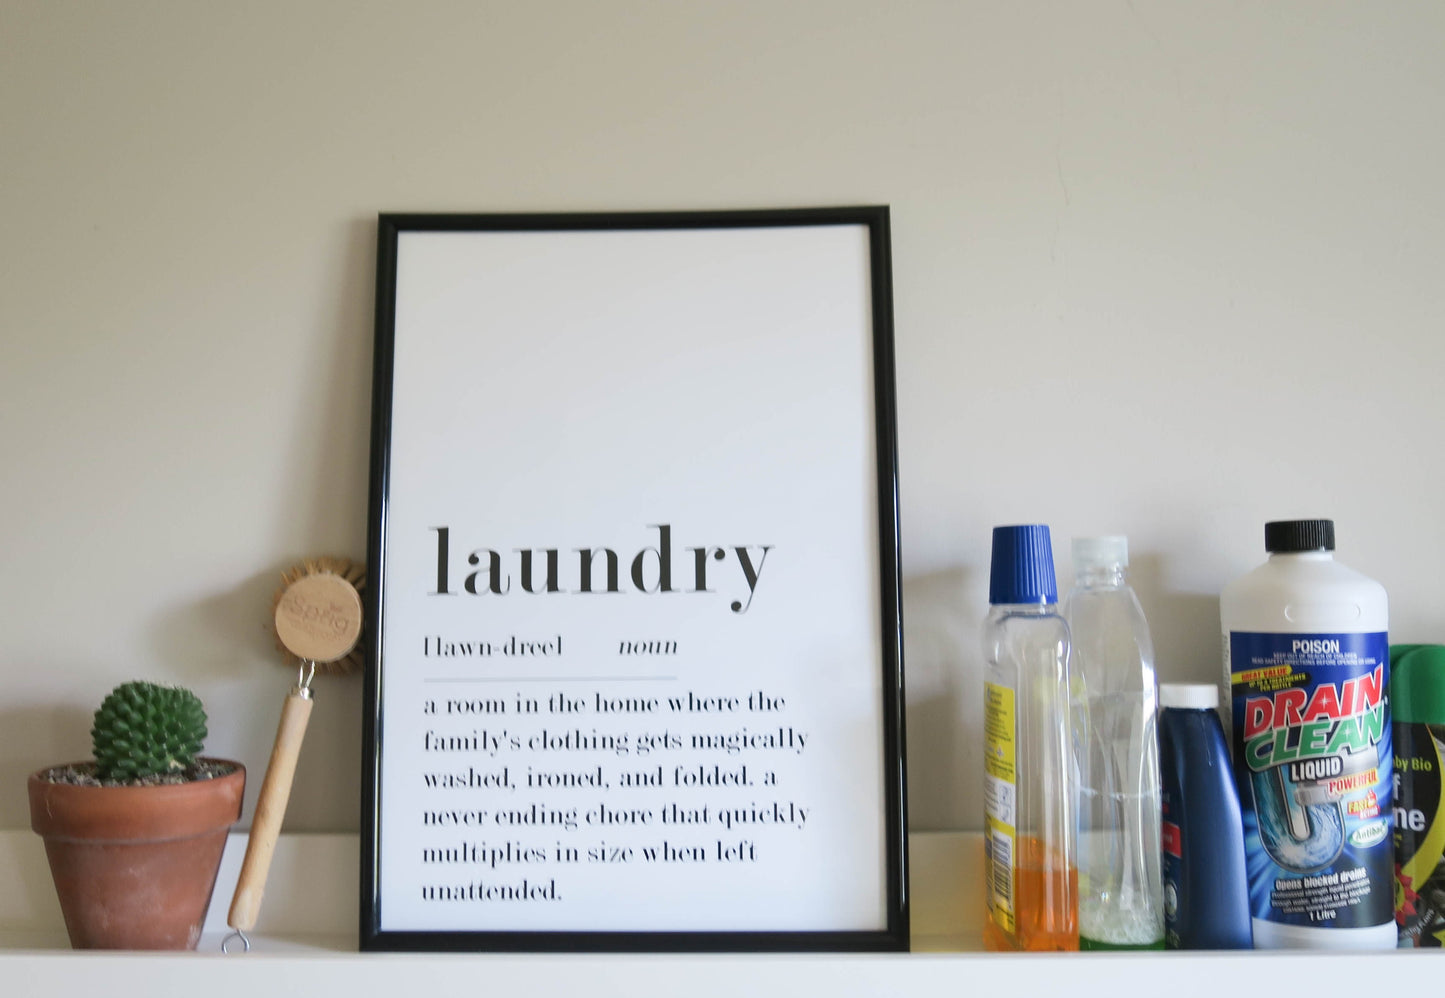 Laundry definition print